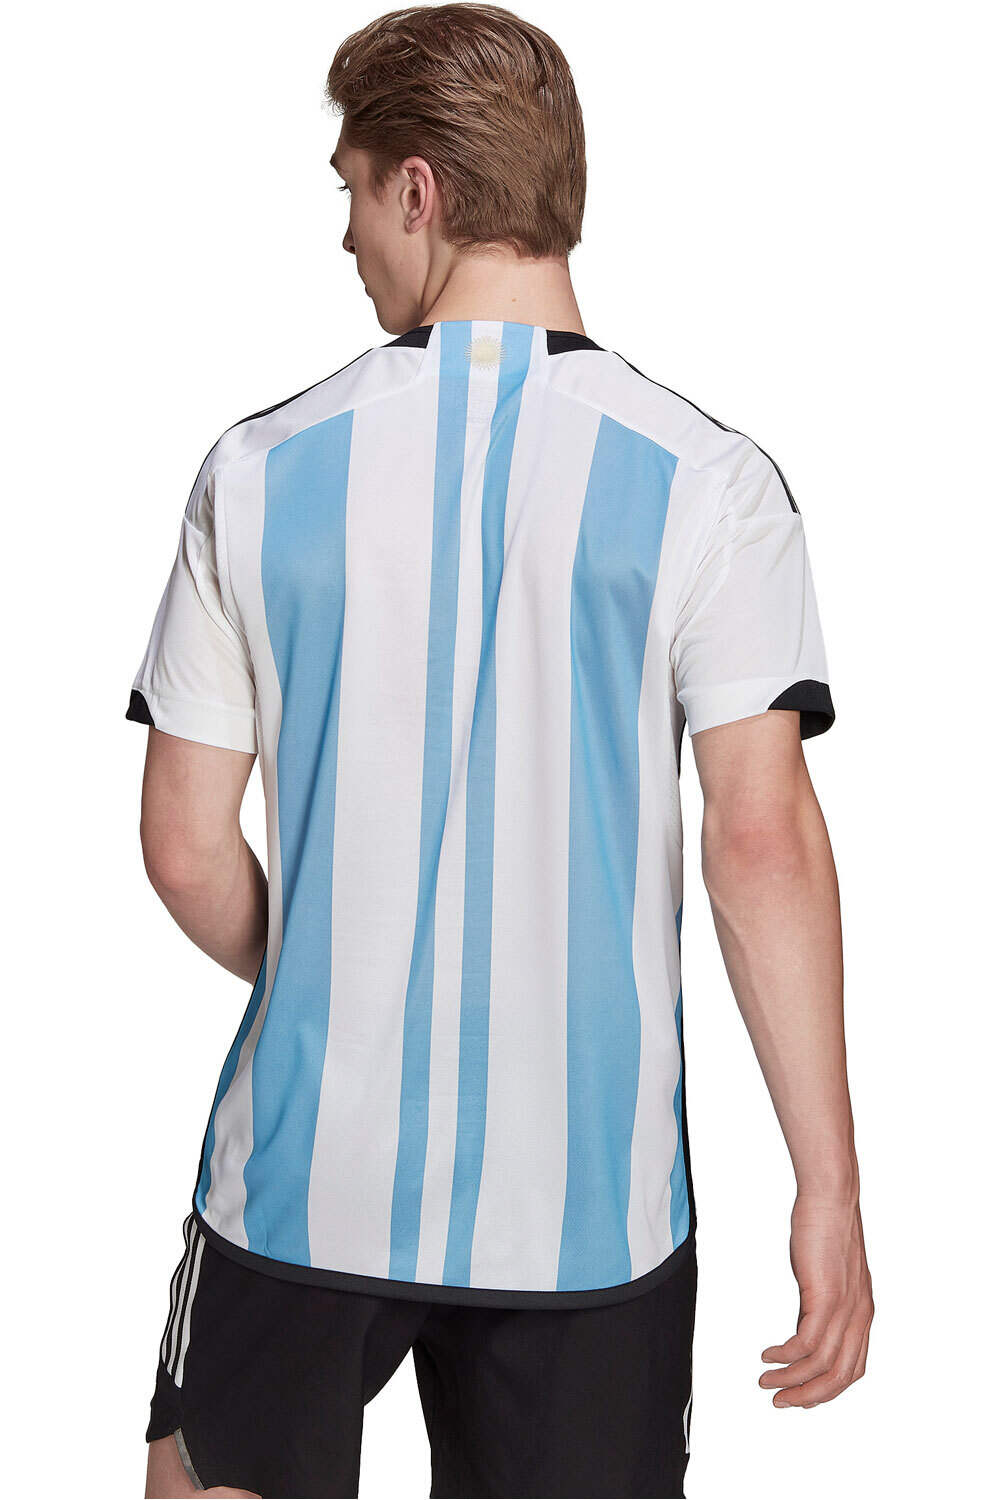 adidas camiseta de fútbol oficiales ARGENTINA 22 H JSY BLCE vista trasera